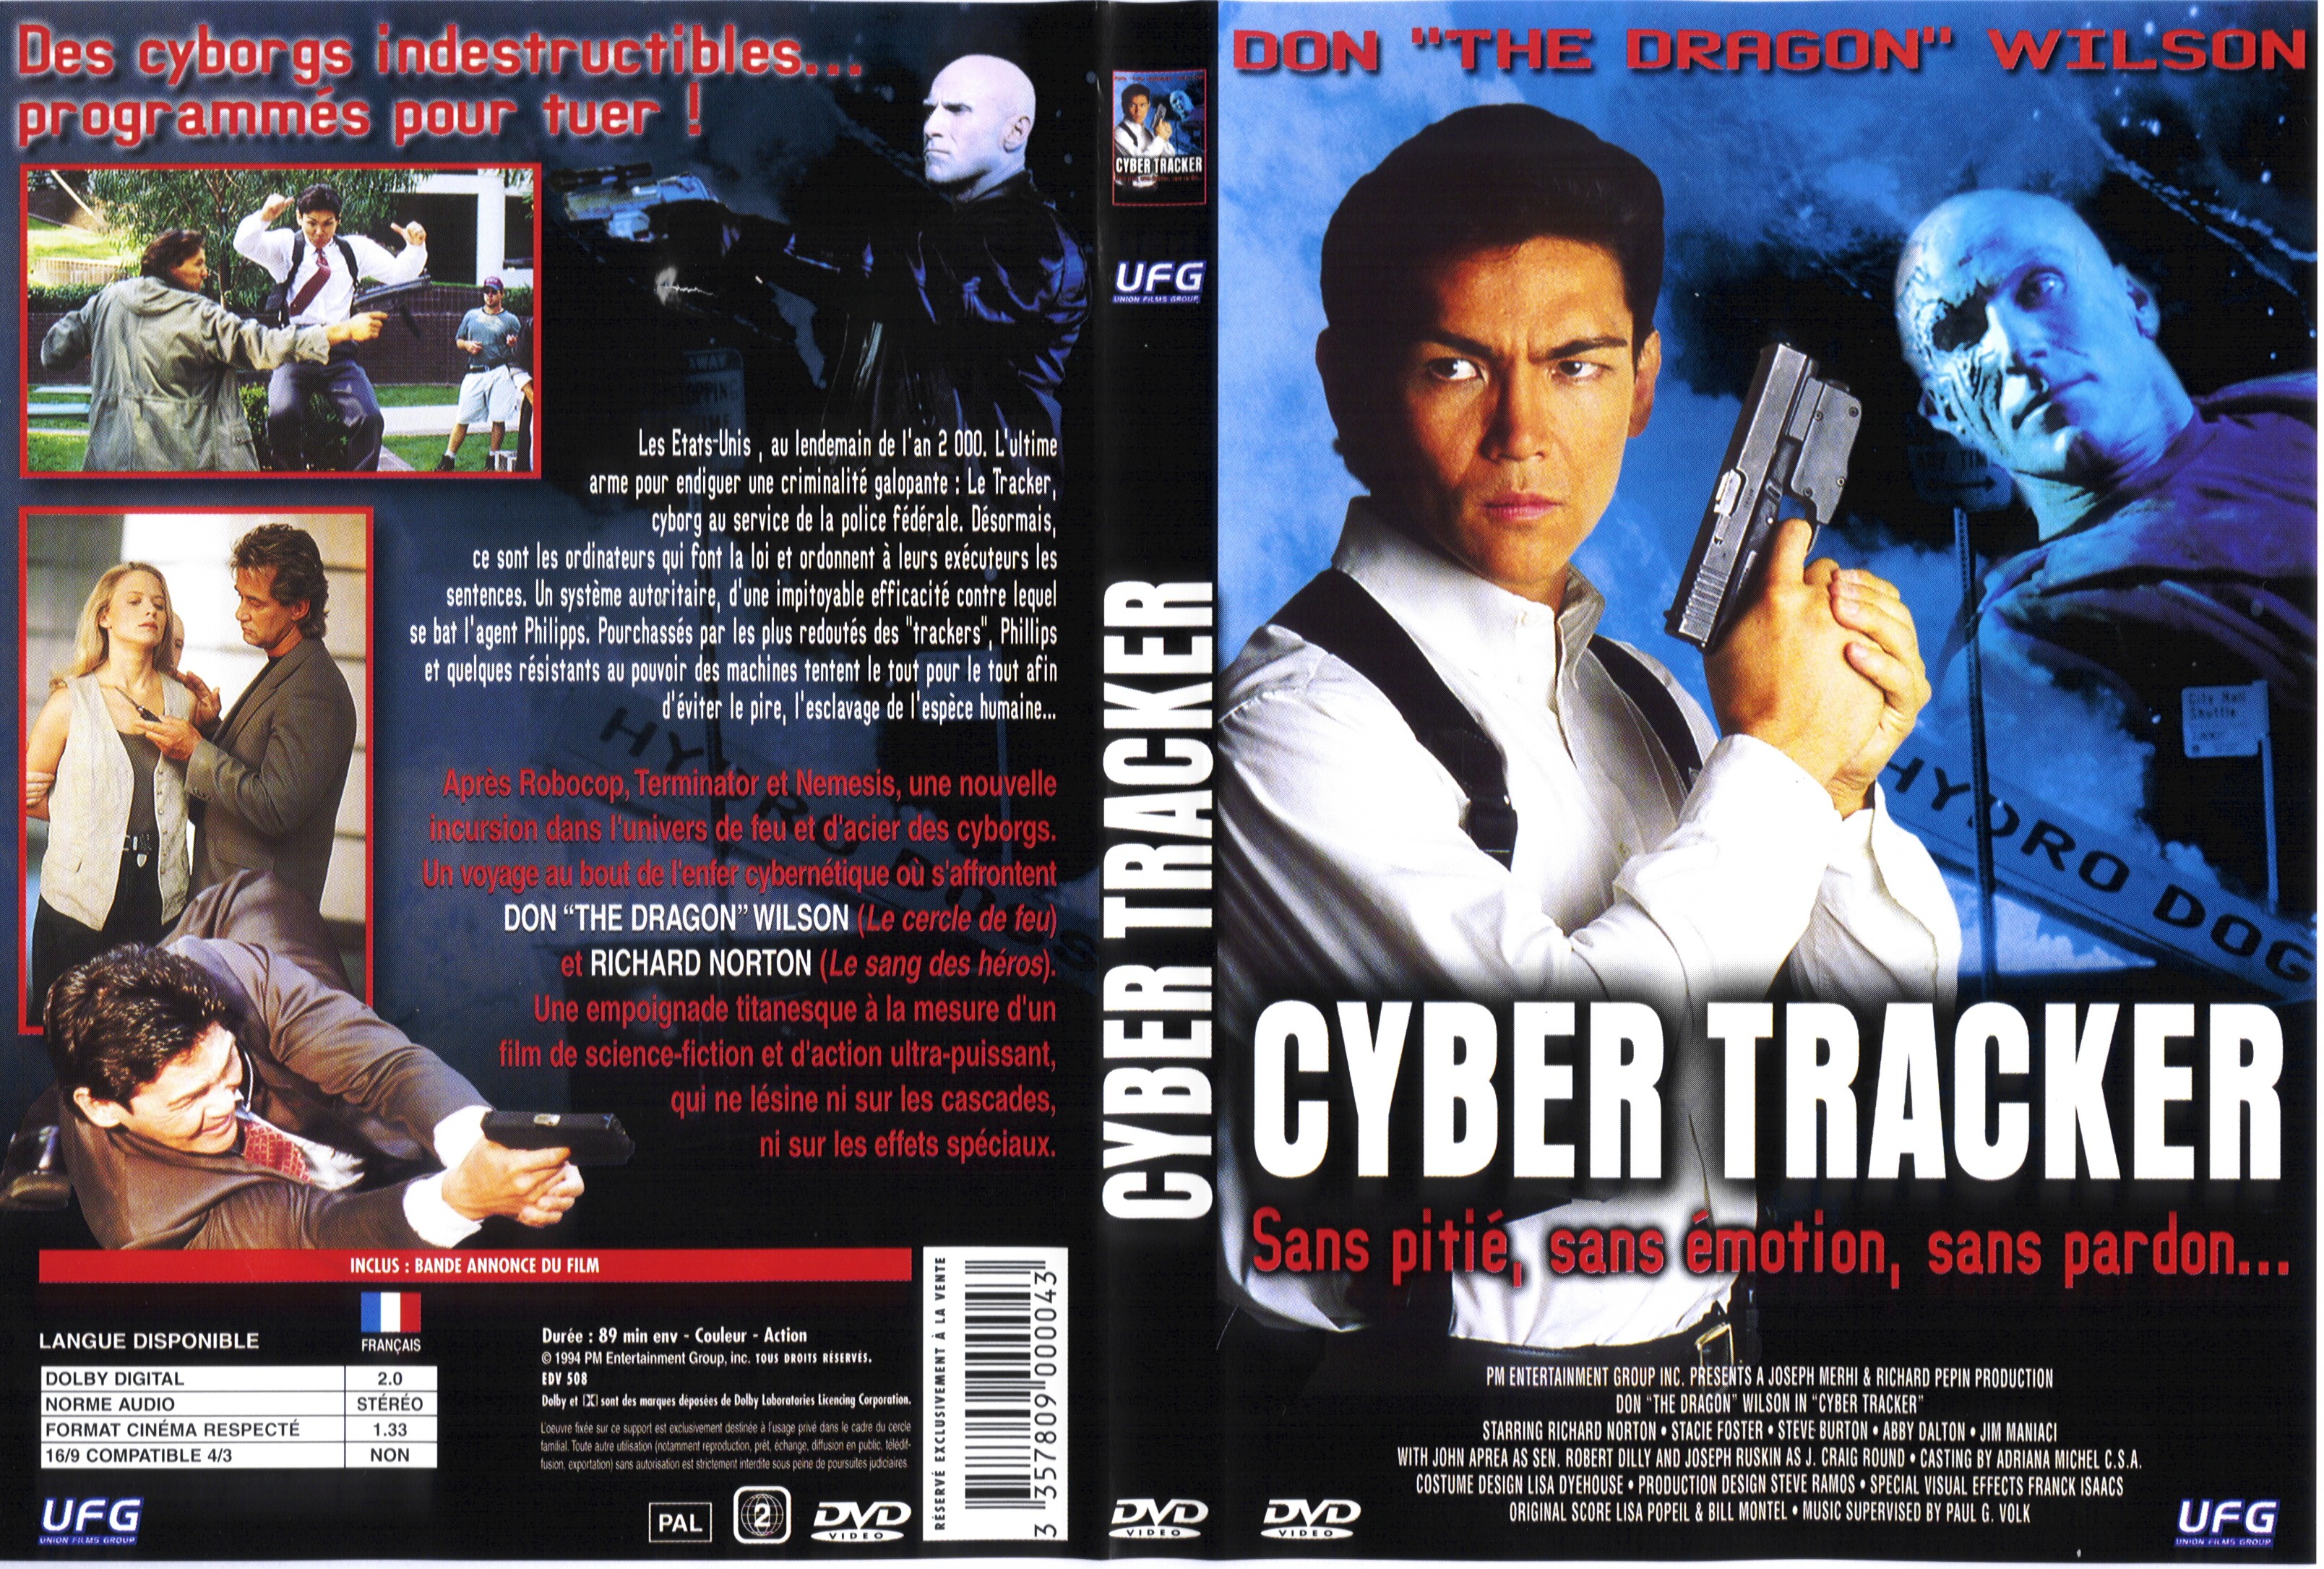 Jaquette DVD Cyber tracker